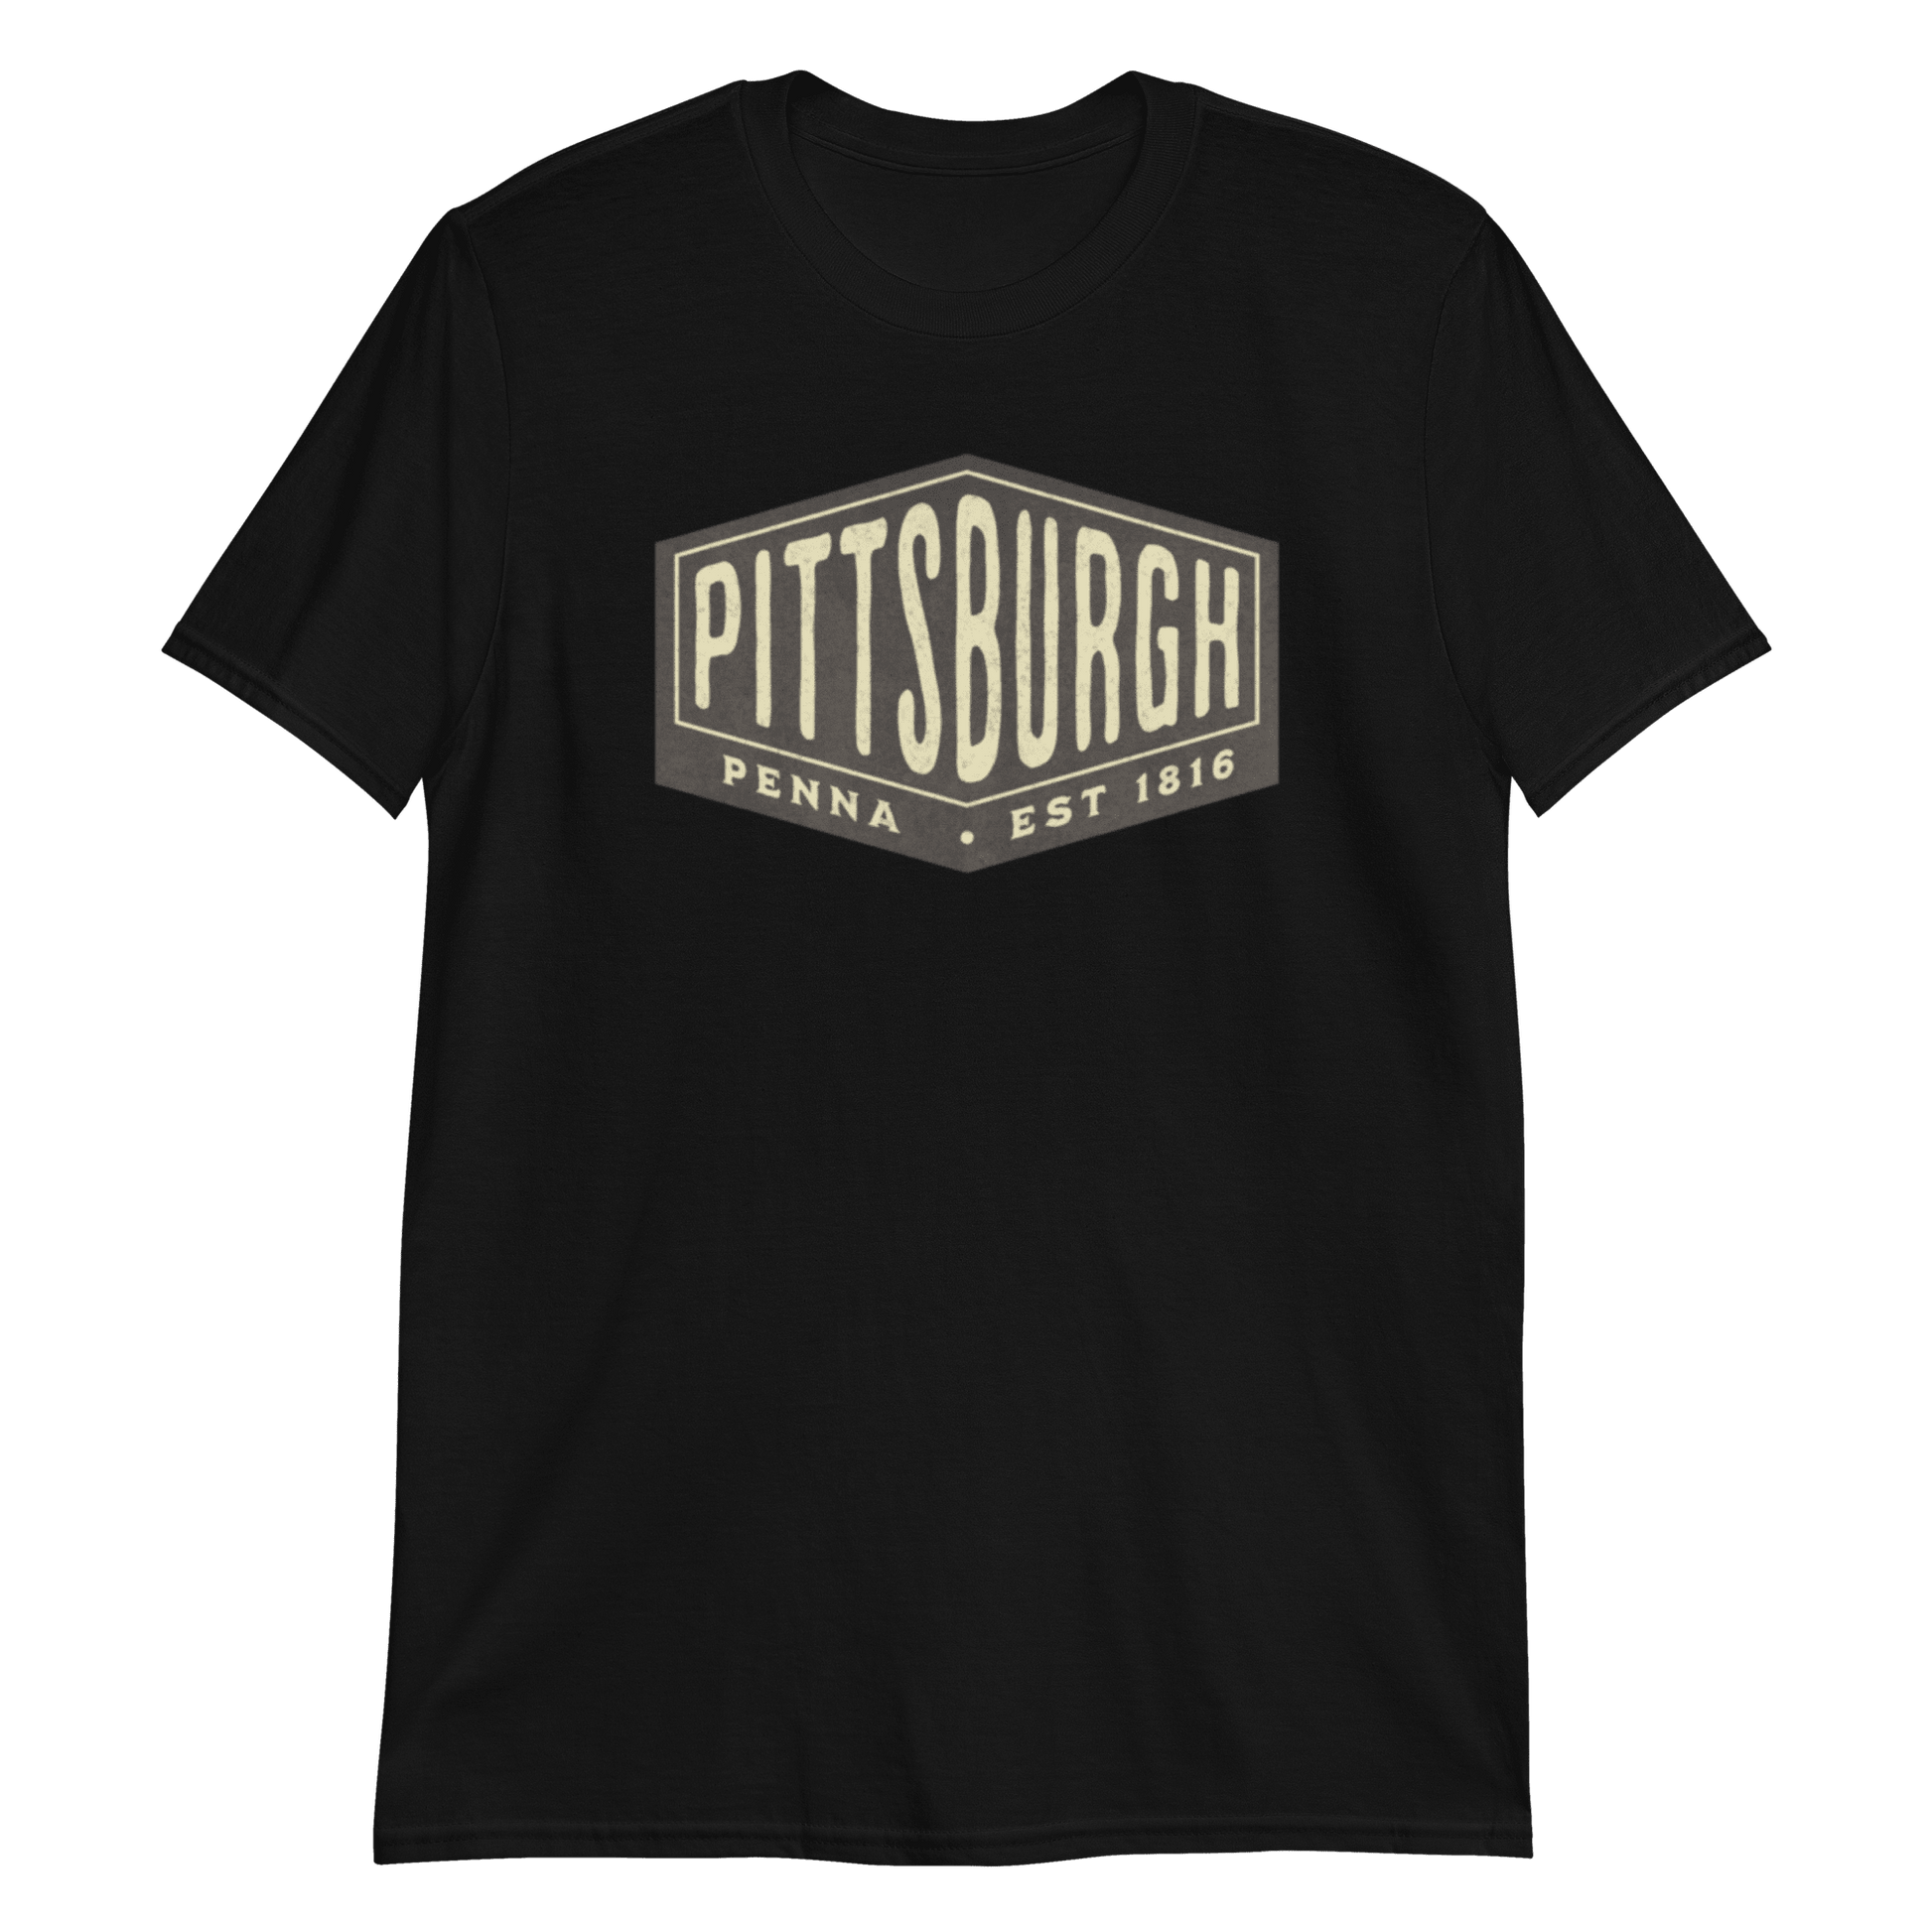 Pittsburgh Penna Est 1816 Vintage Graphic T-Shirt, Steel City Tee, Yinzer Shirt Yinzergear Black S 